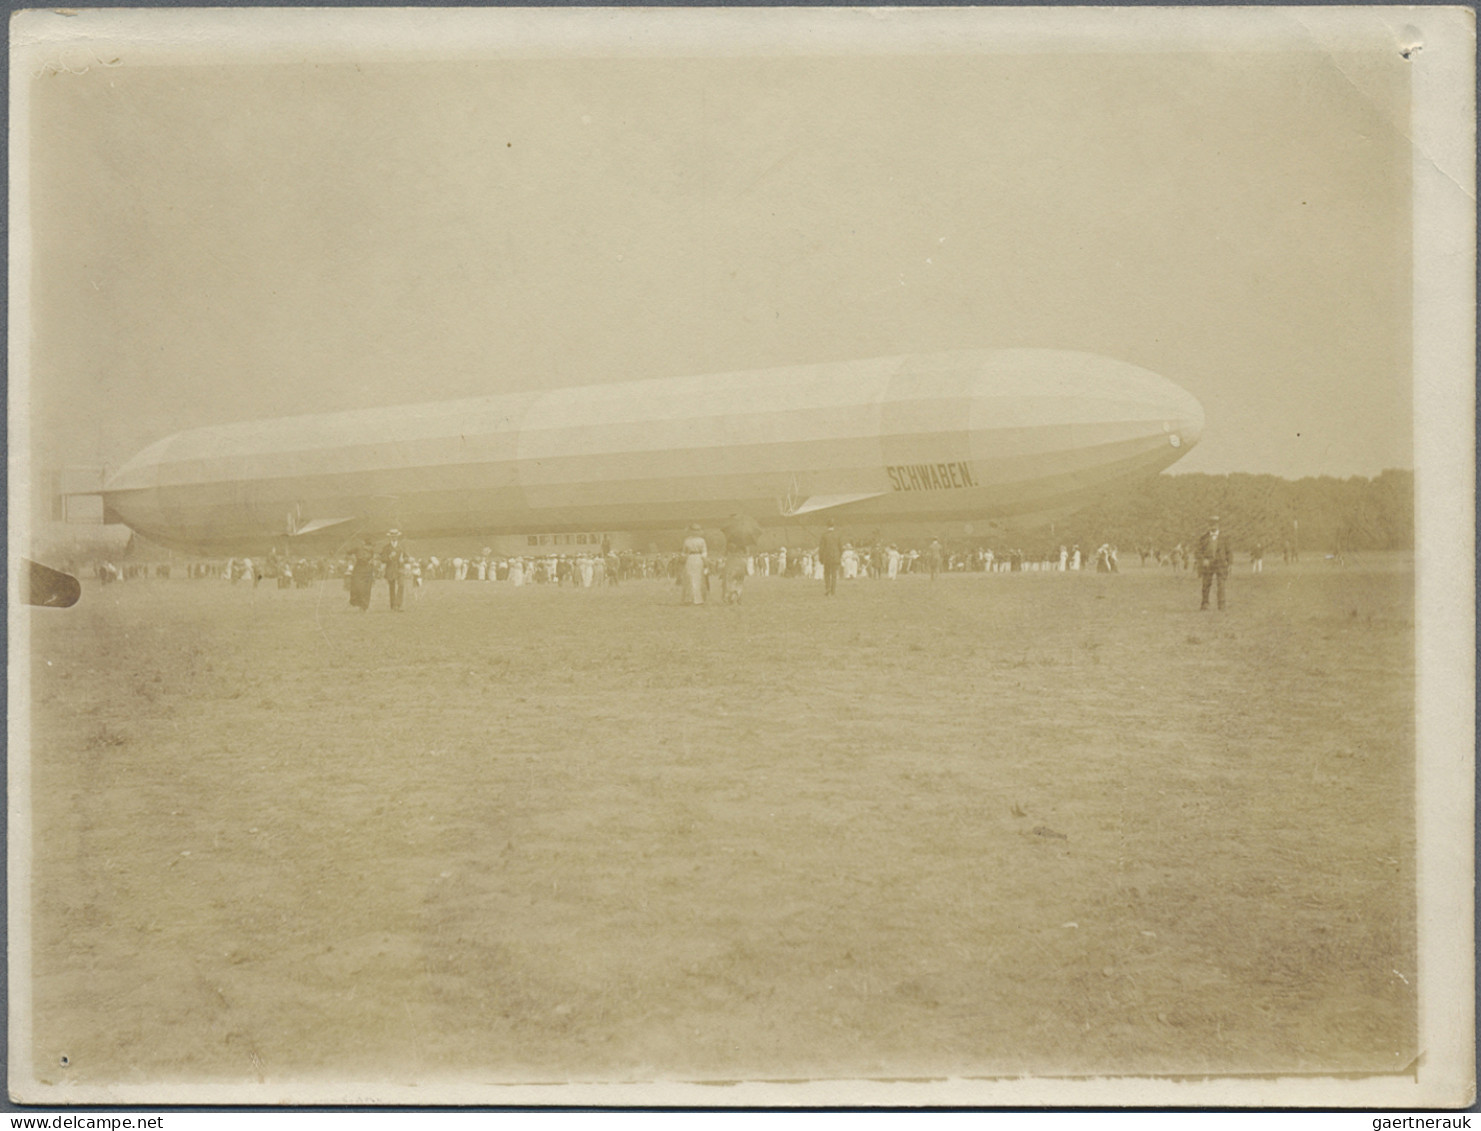 Ansichtskarten: Motive: ZEPPELIN: Over two hundred Zeppelin flights, original pr